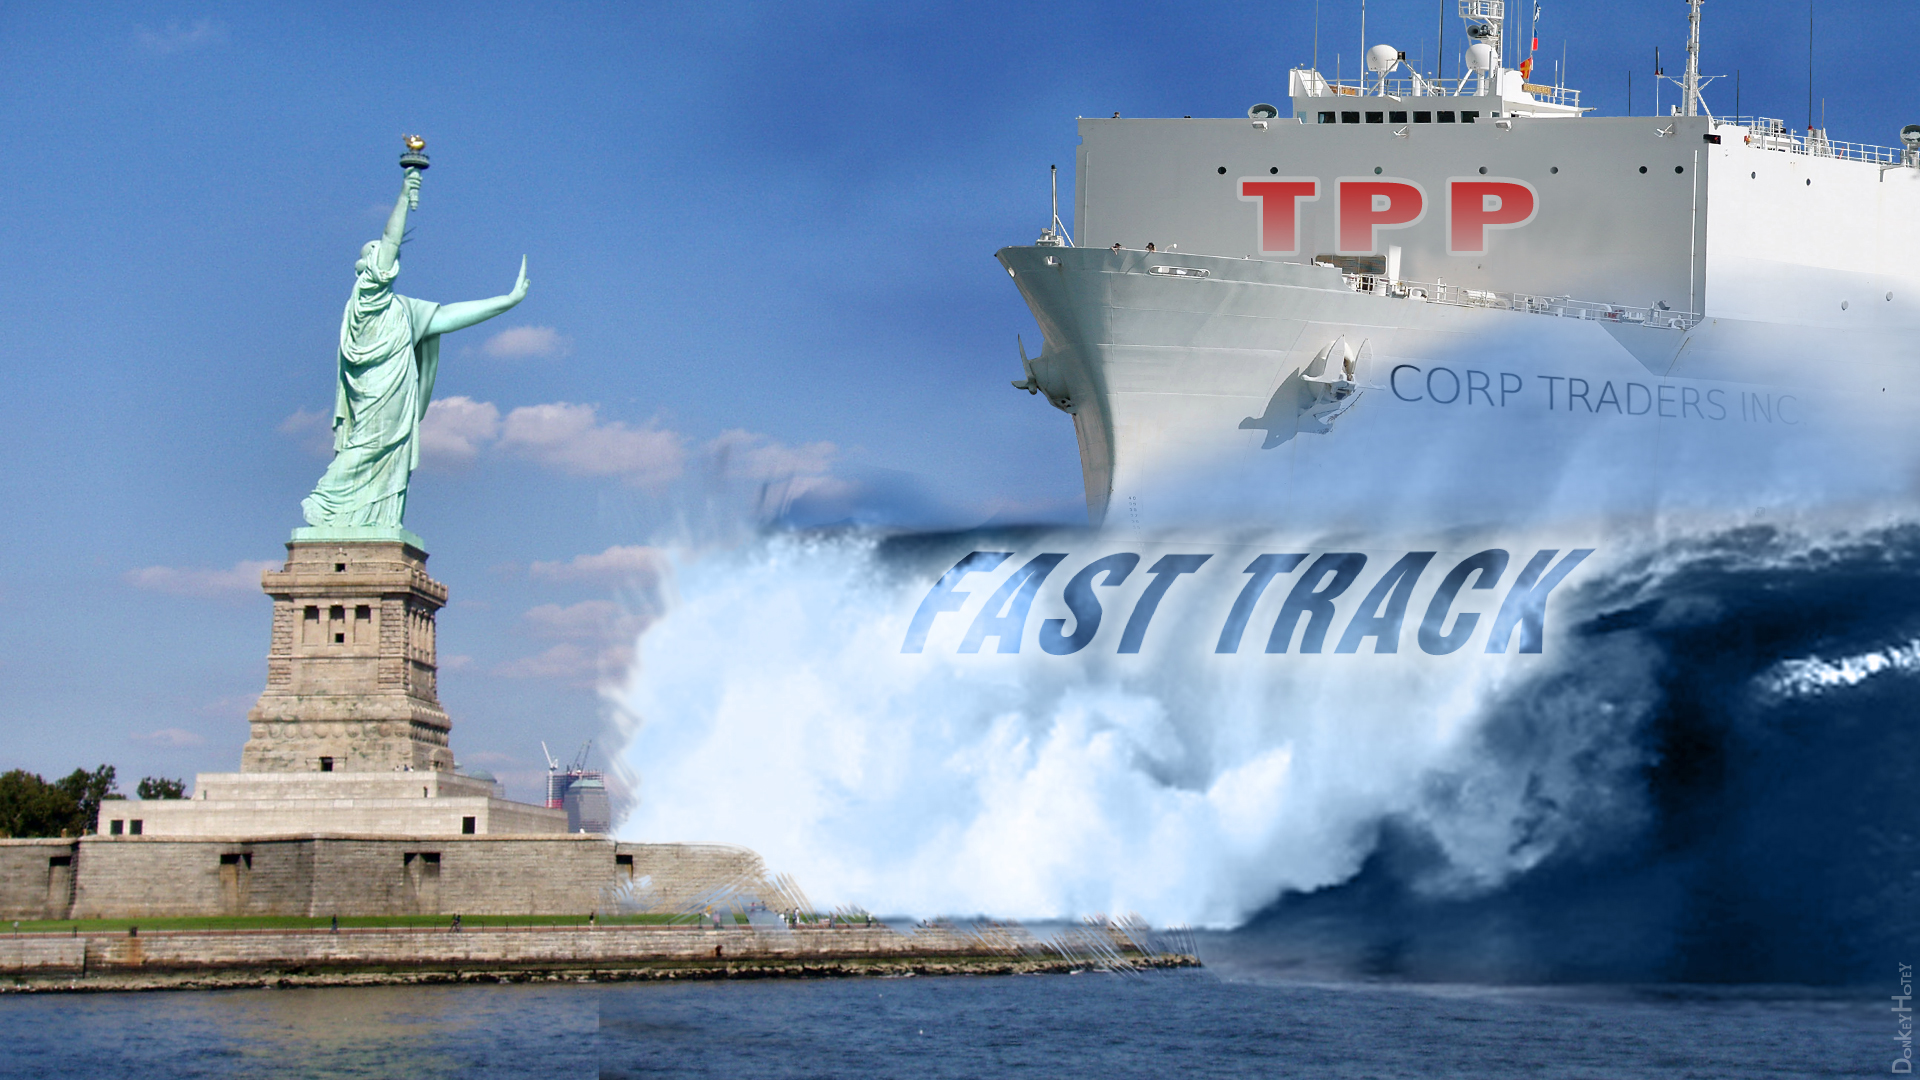 Statue of Liberty faces TPP tsunami